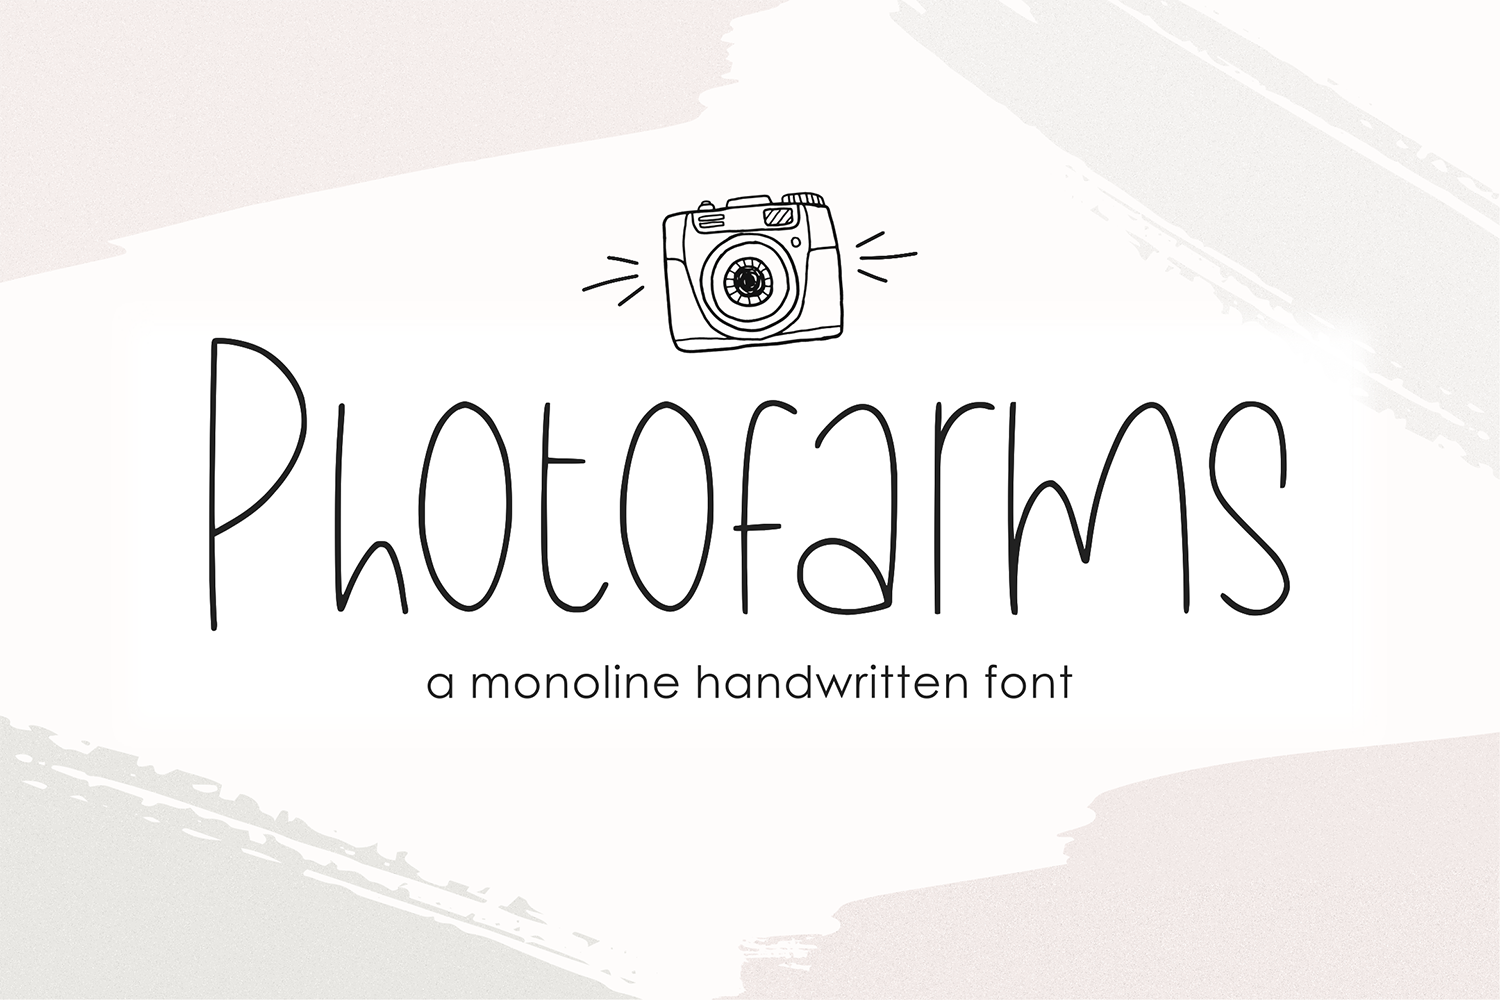 Photofarms Free Font